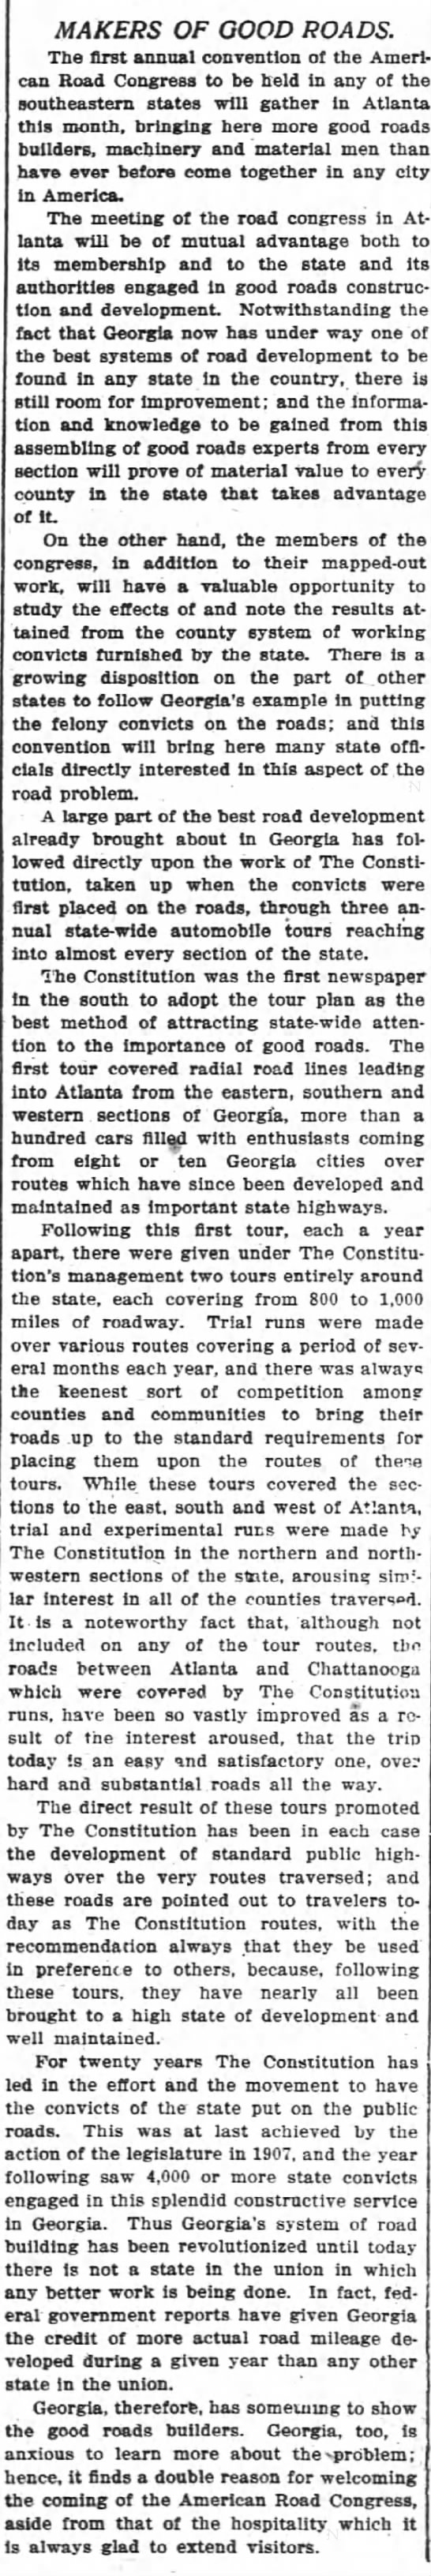 American Road Congress Atlanta, 1915 - 